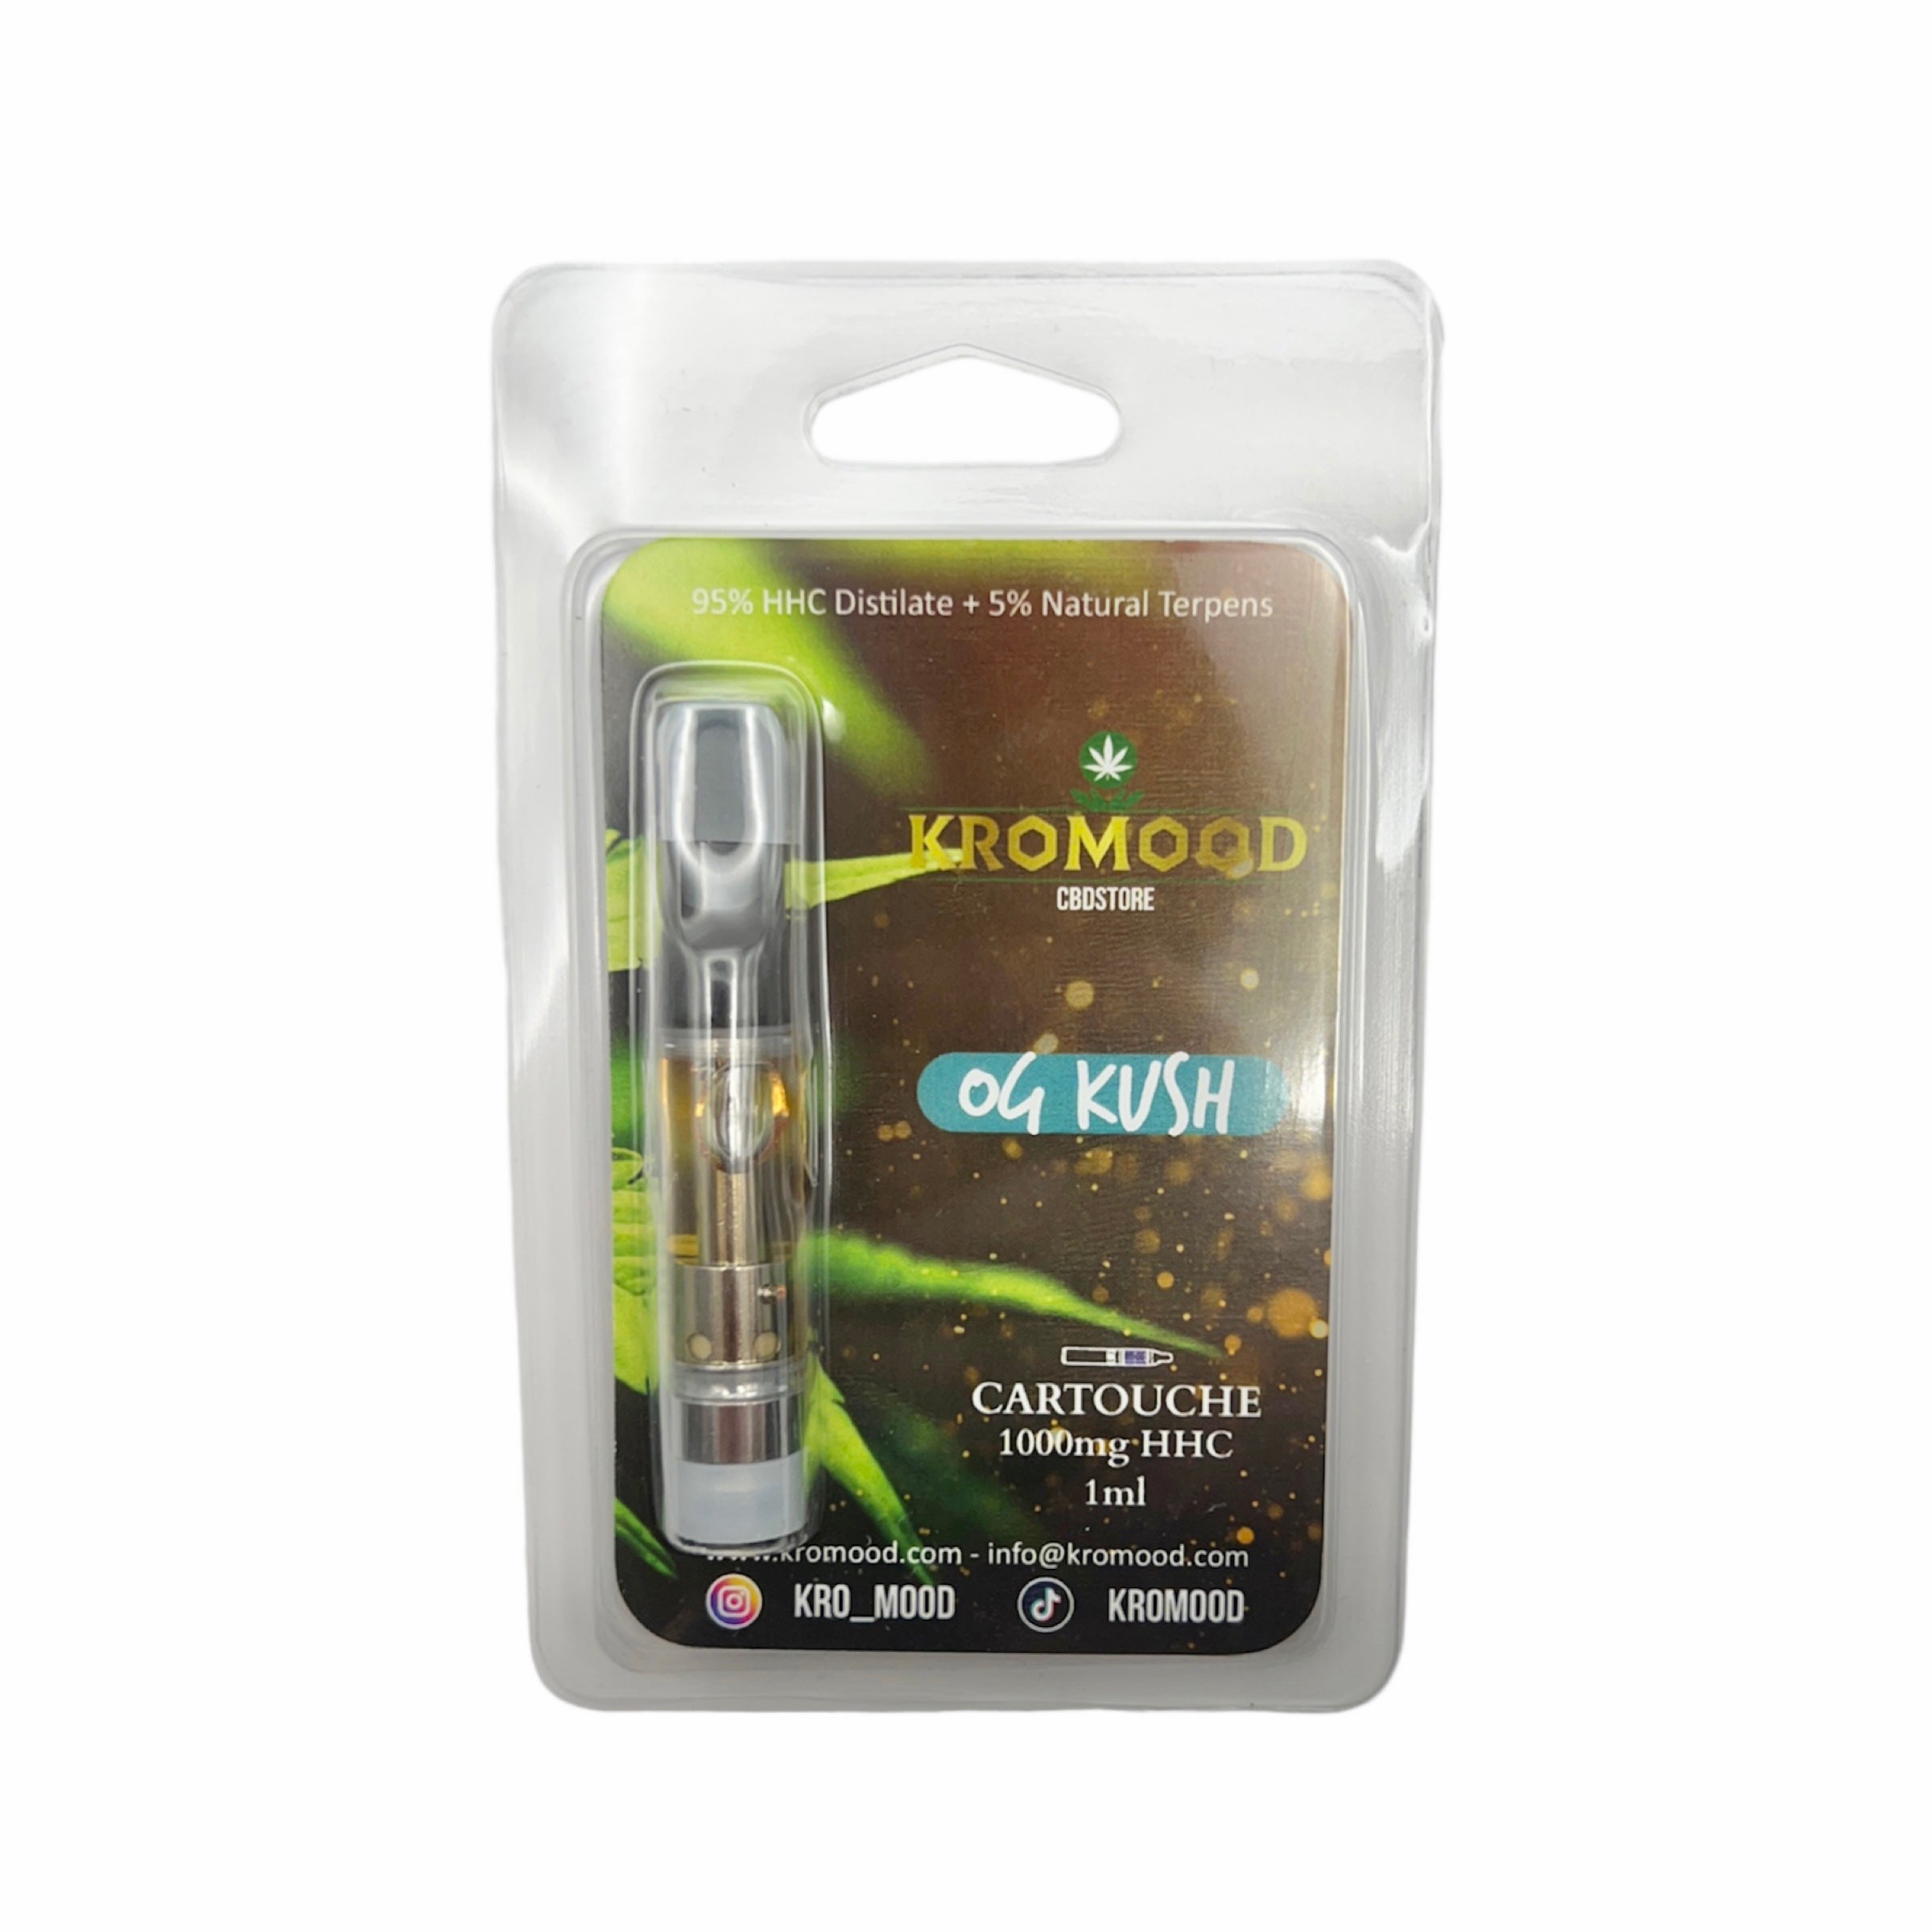 KroMood Cartridge (Dab Pen) of HHC - Og Kush - 95% HHC/1000MG - 600 puffs